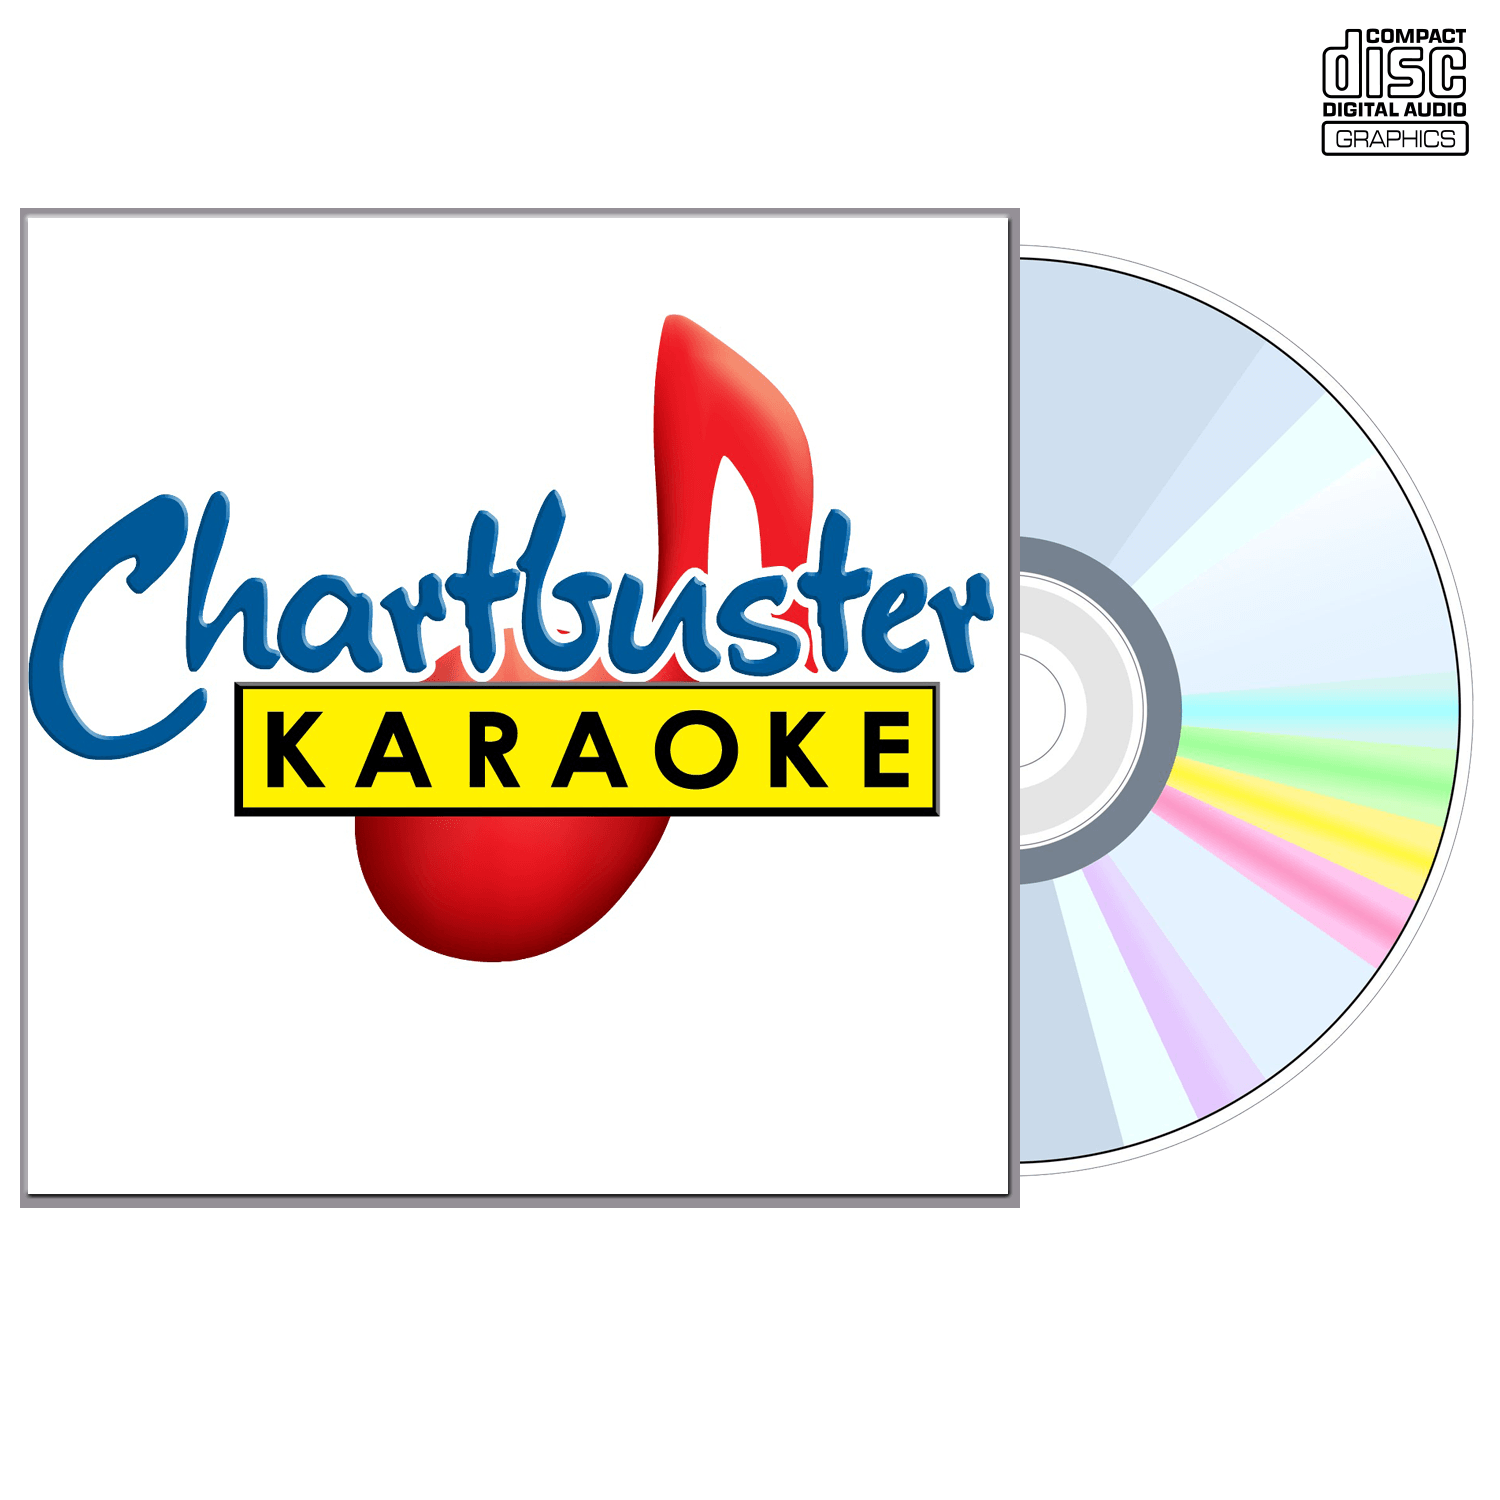 Billy Dean Vol 2 - CD+G - Chartbuster Karaoke - Karaoke Home Entertainment